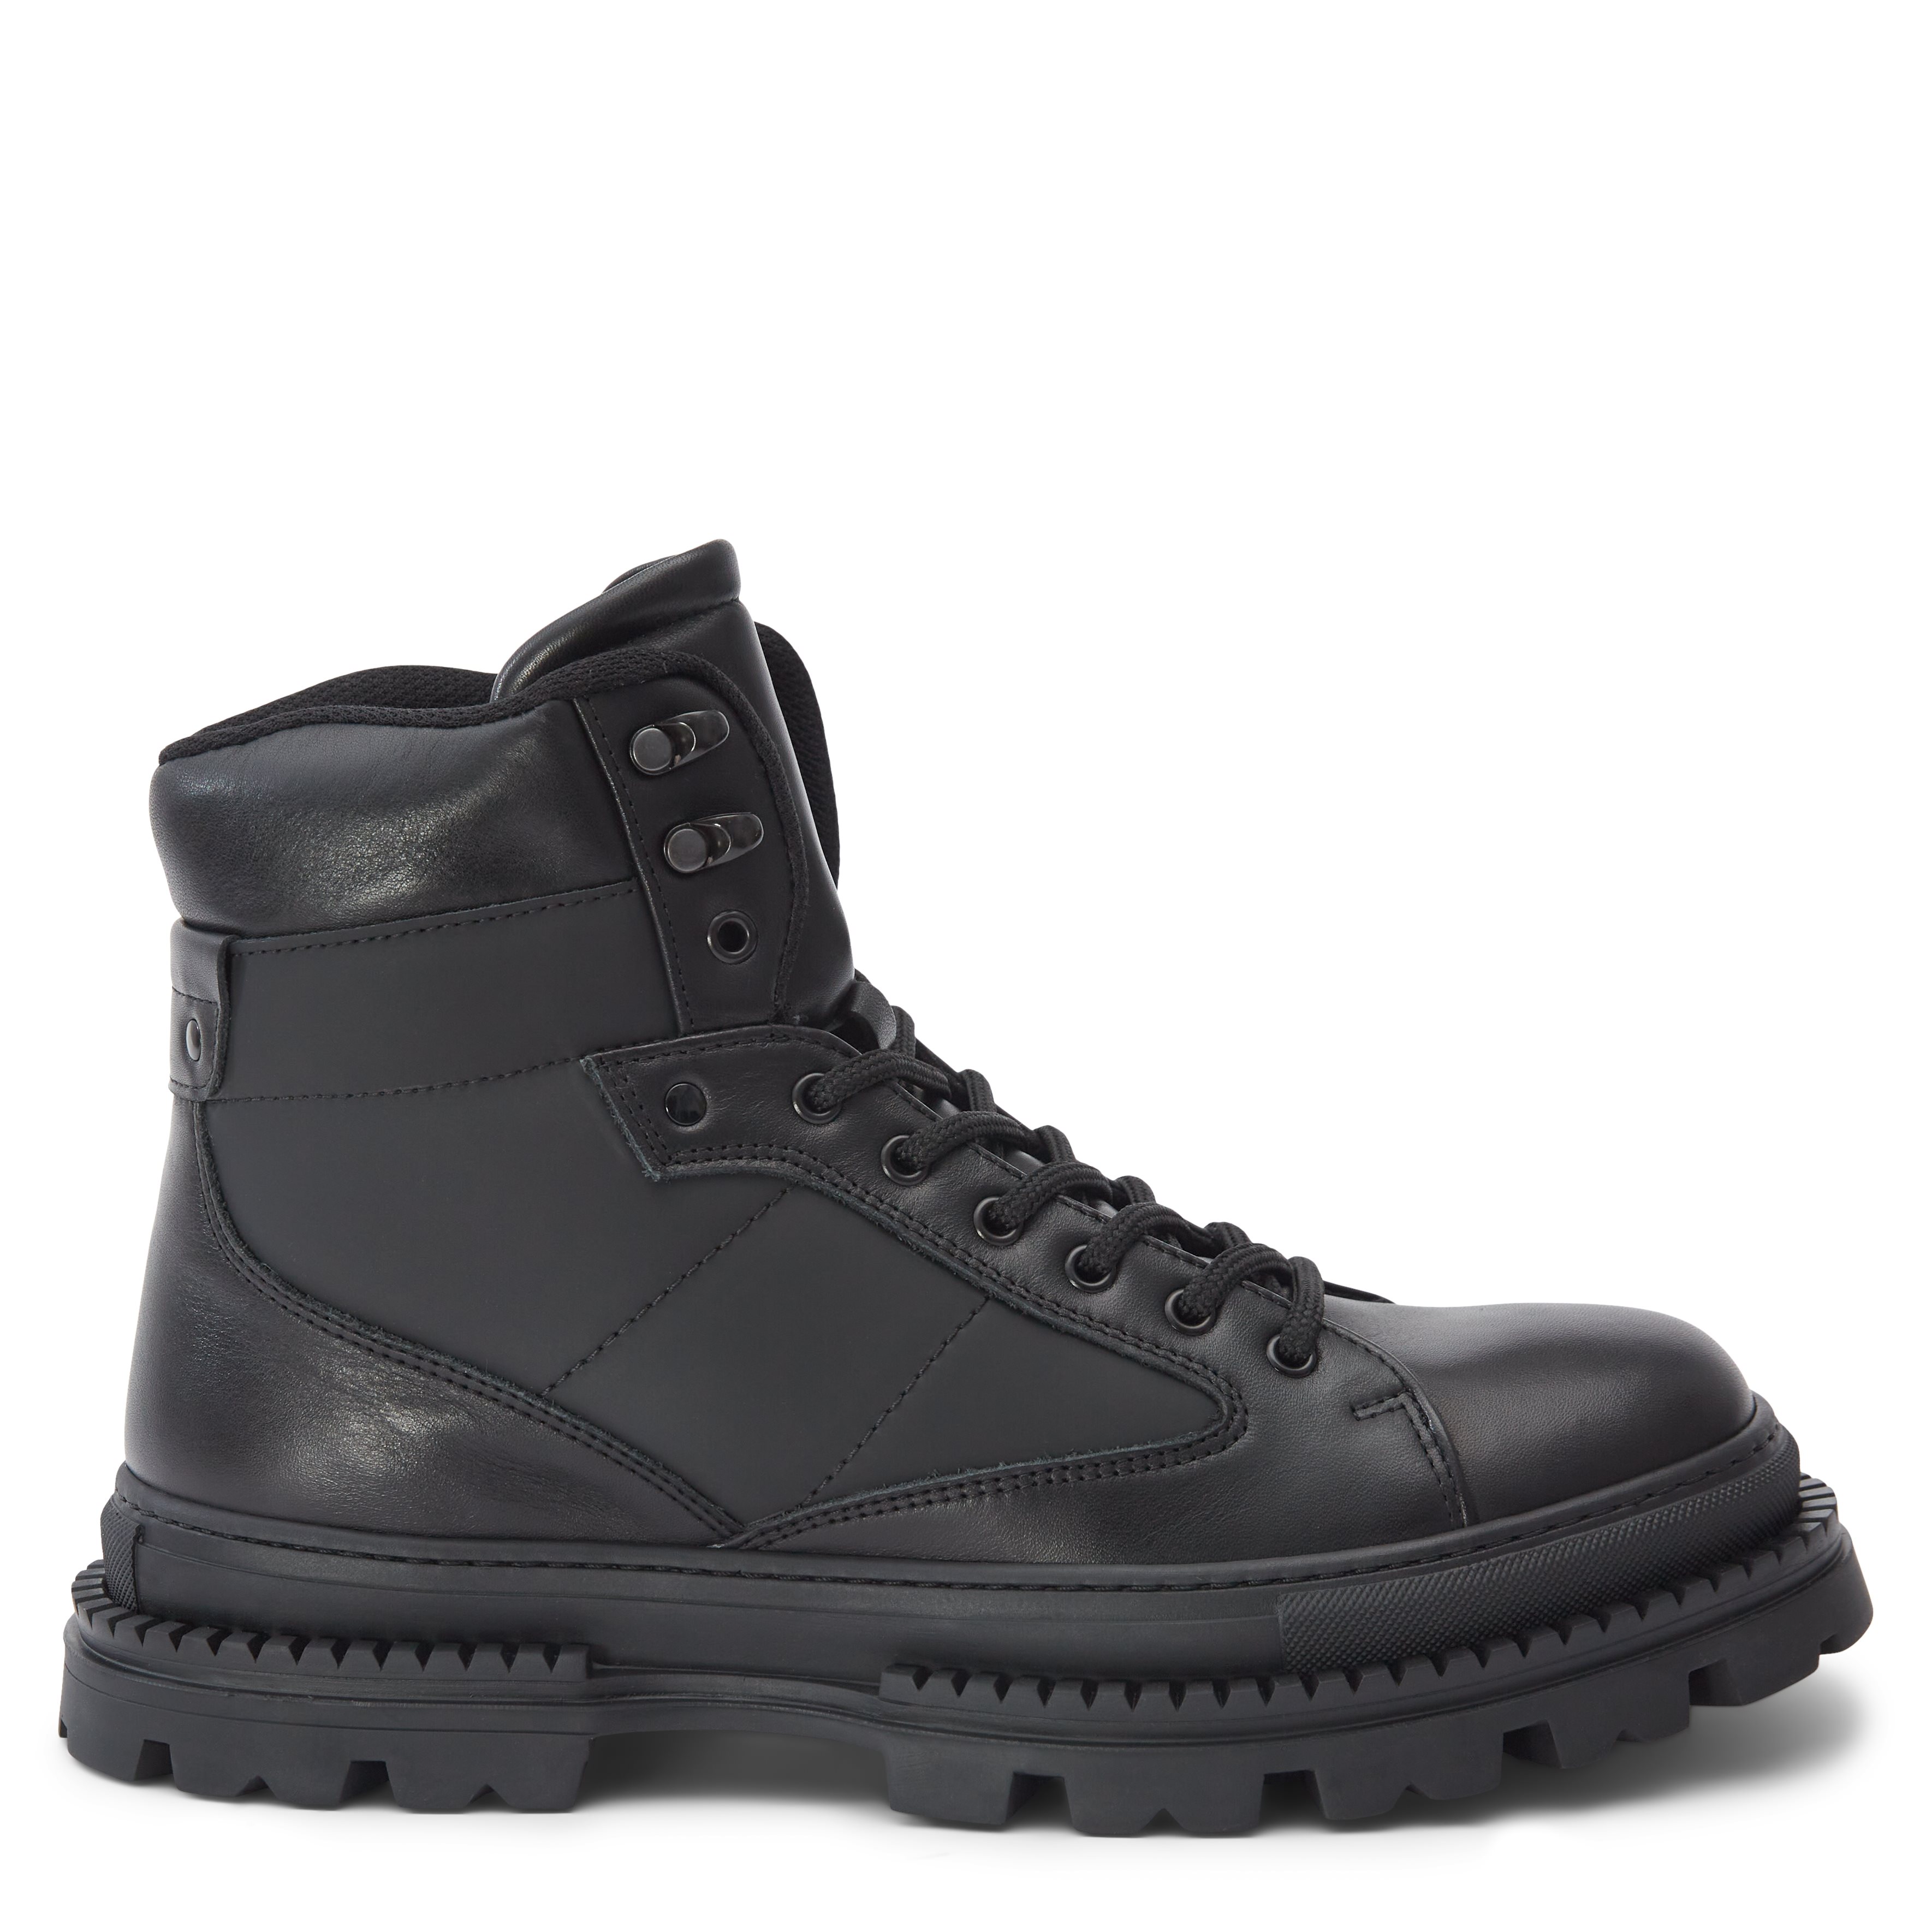 Ahler Shoes A23-99992 Black